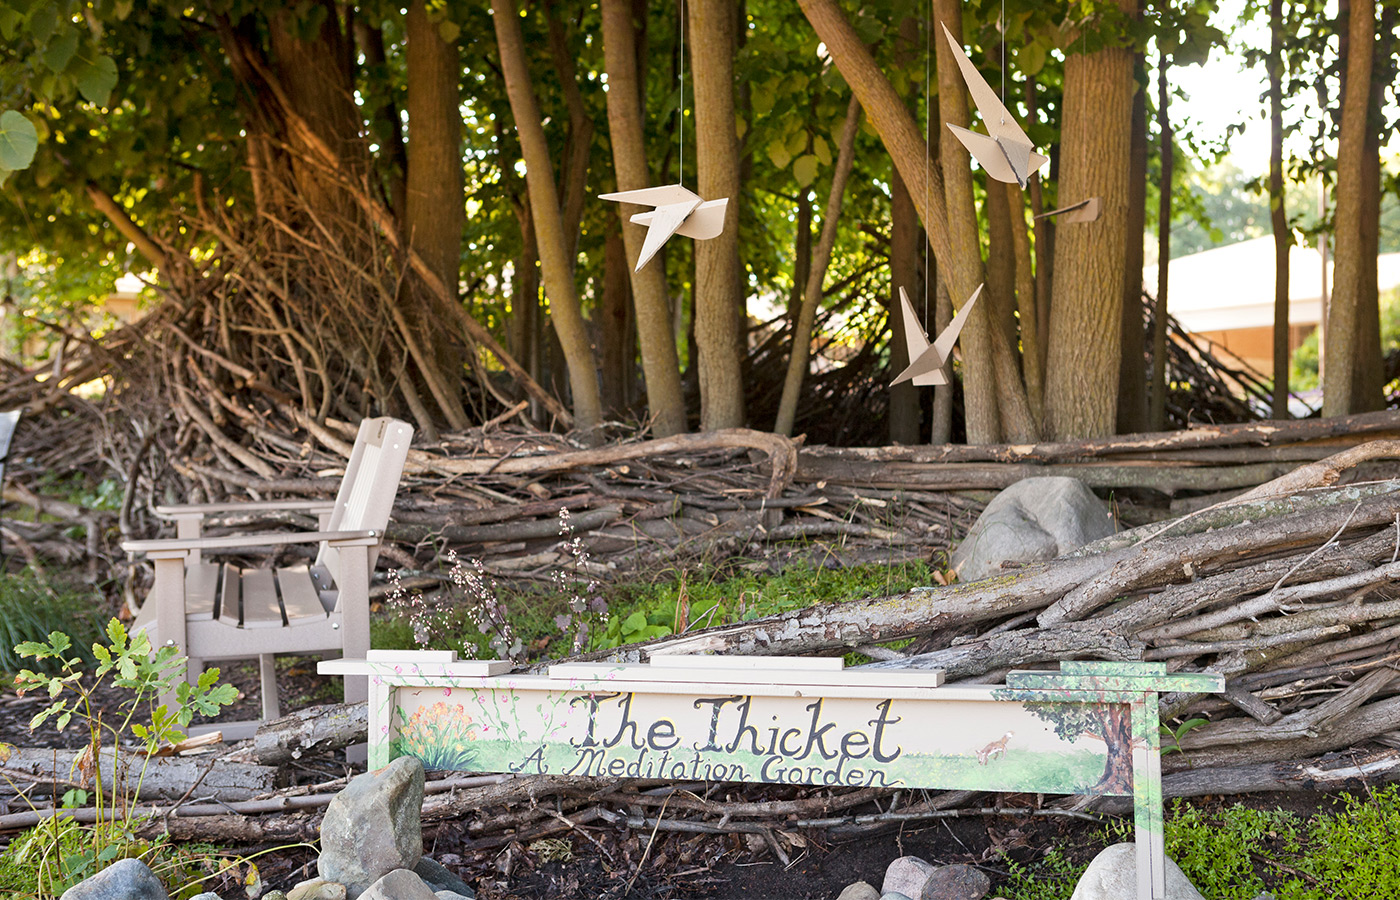 The Thicket meditation garden.